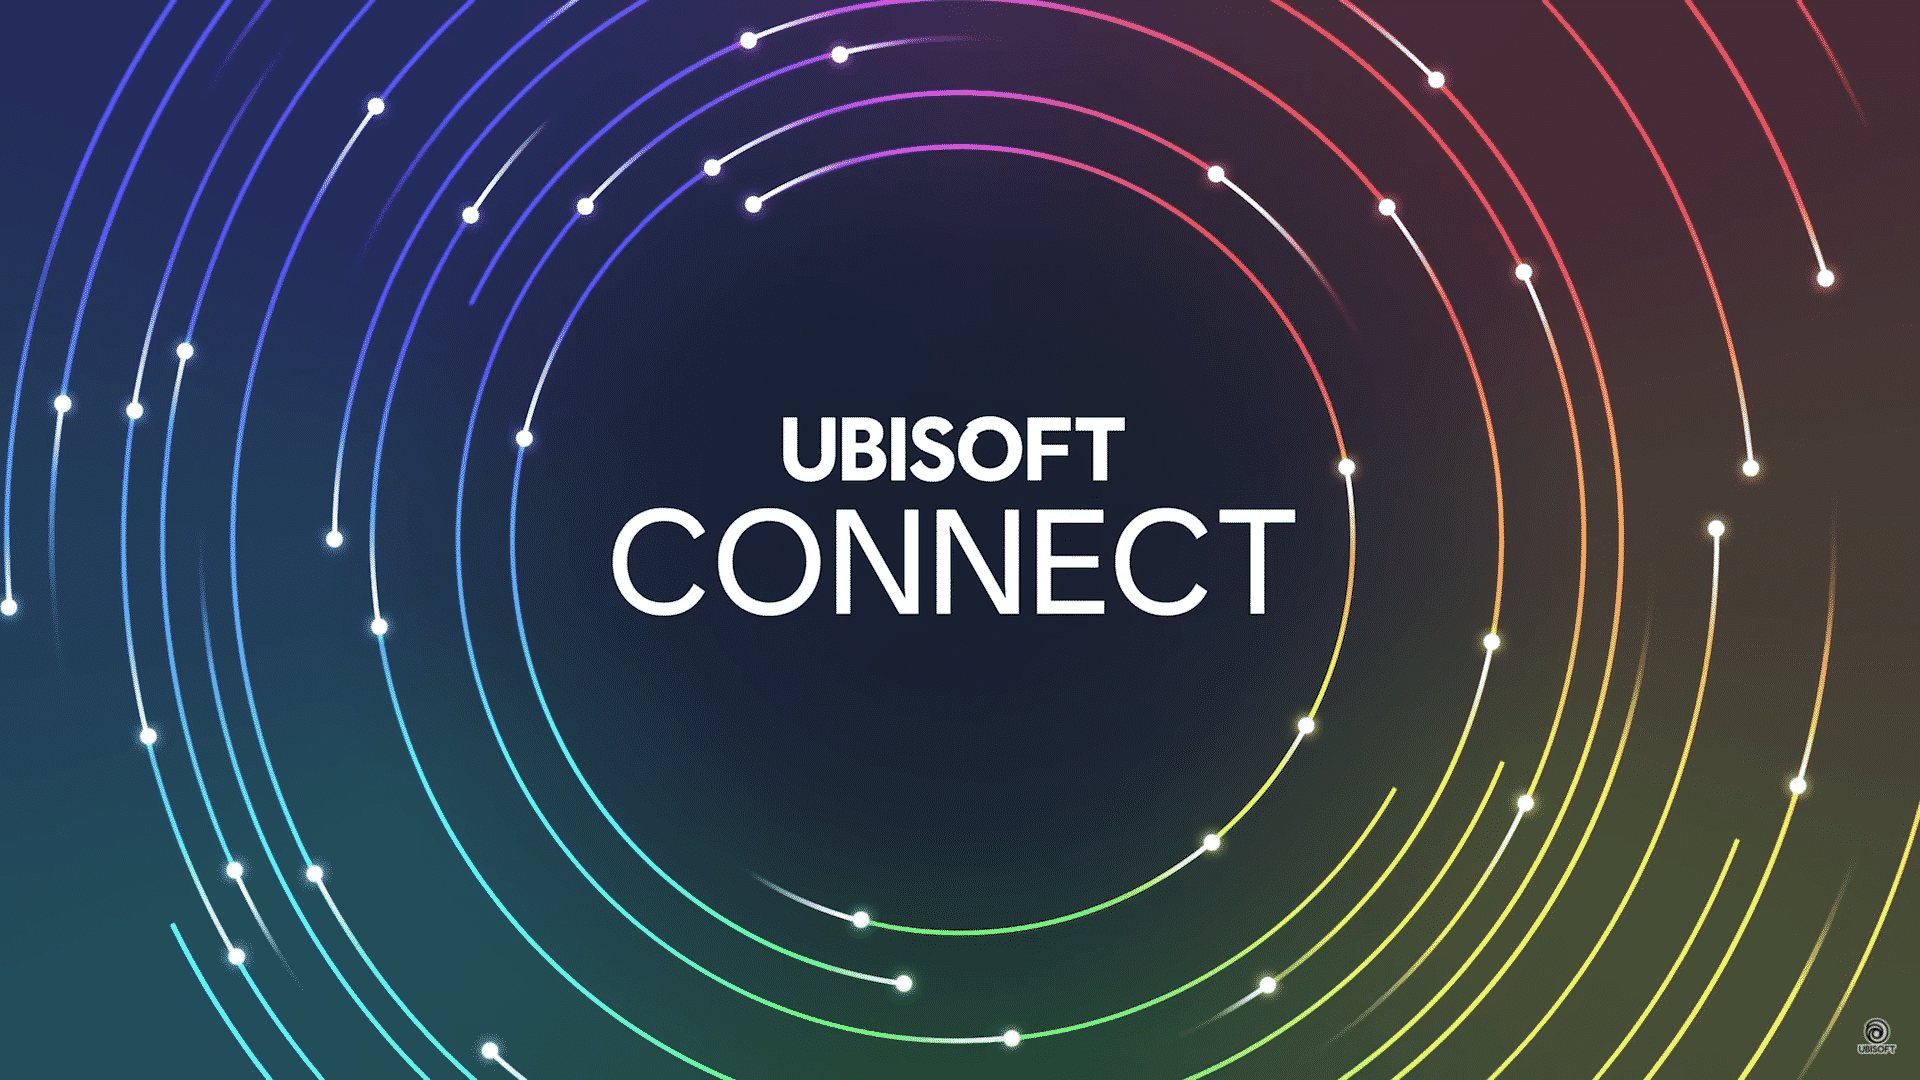 Ubisoft connect